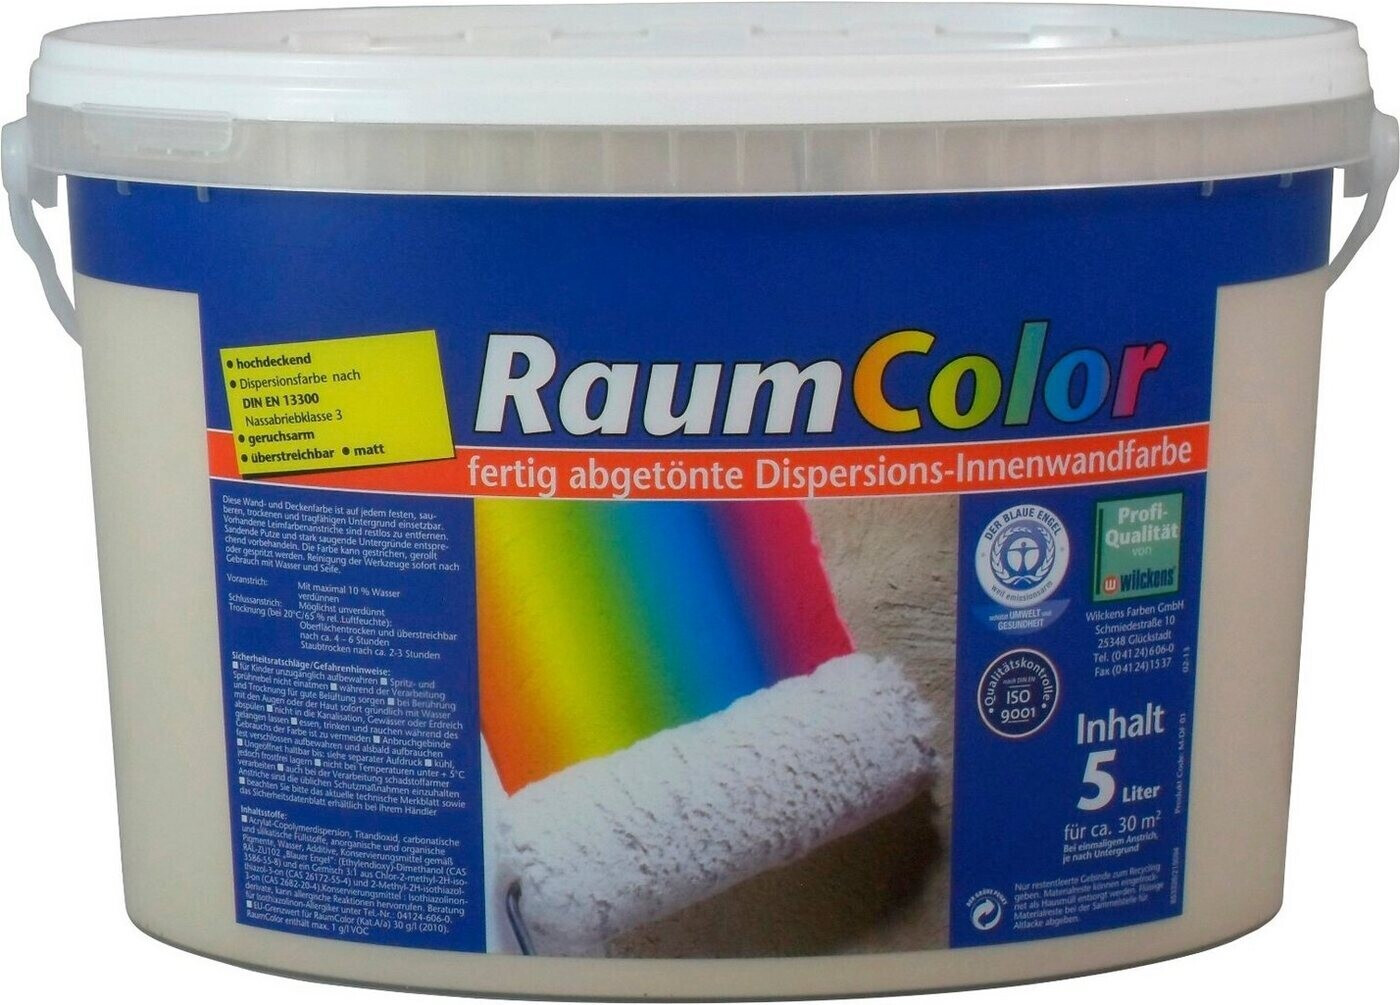 Wilckens Raumcolor Dispersions-Innenfarbe 5 l 15,99 € bei Preisvergleich ab 